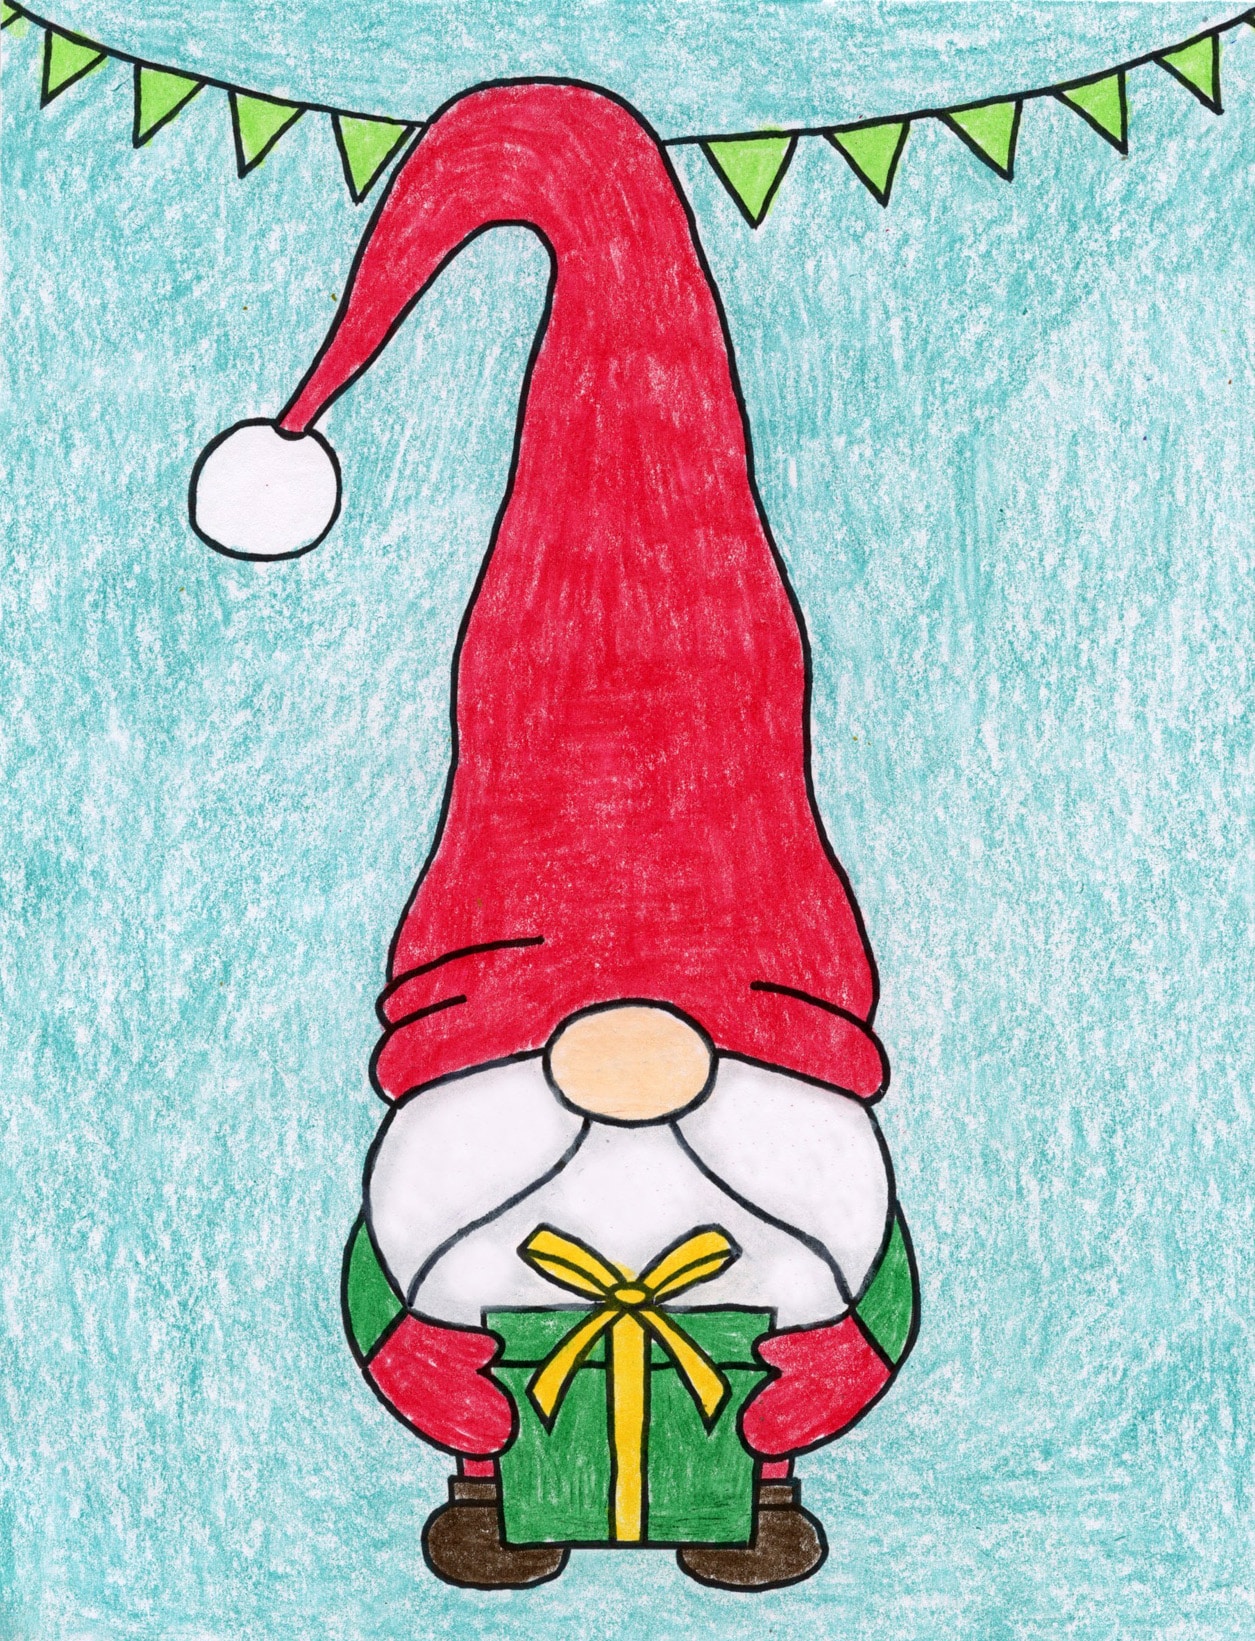 Easy How to Draw a Christmas Gnome Tutorial and Christmas Gnome